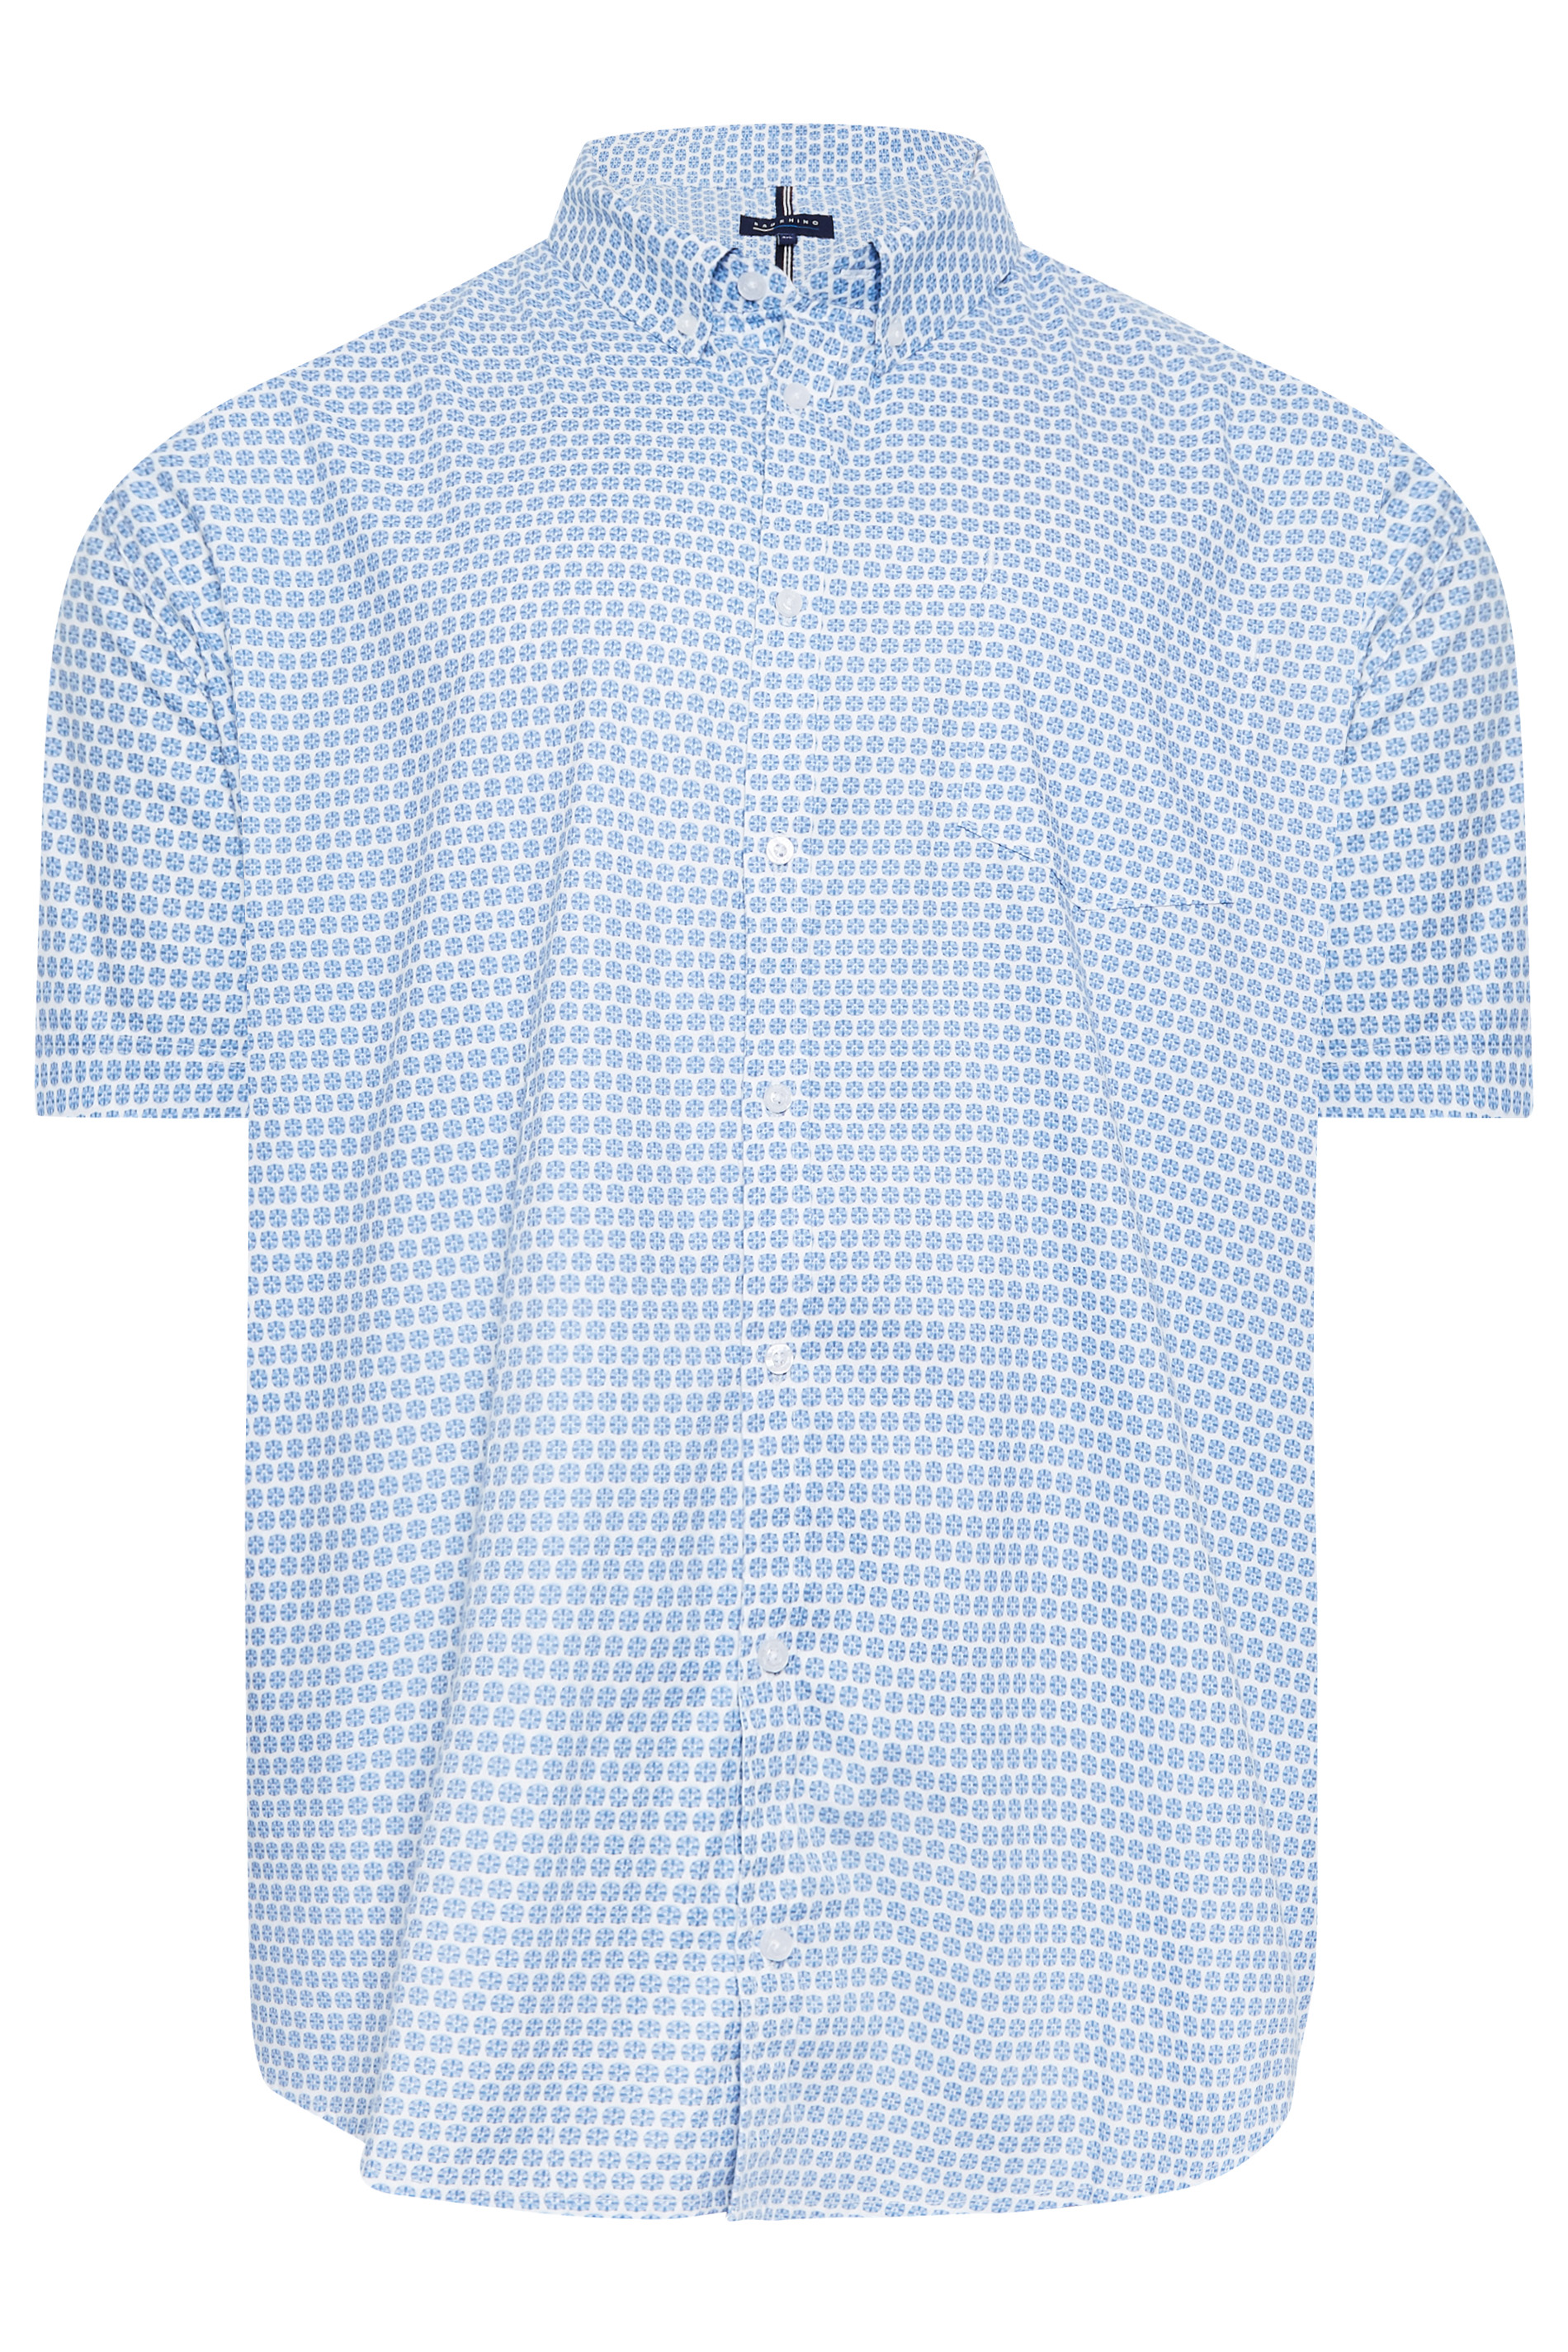 BadRhino Big & Tall White & Blue Geometric Floral Print Poplin Shirt | BadRhino 3